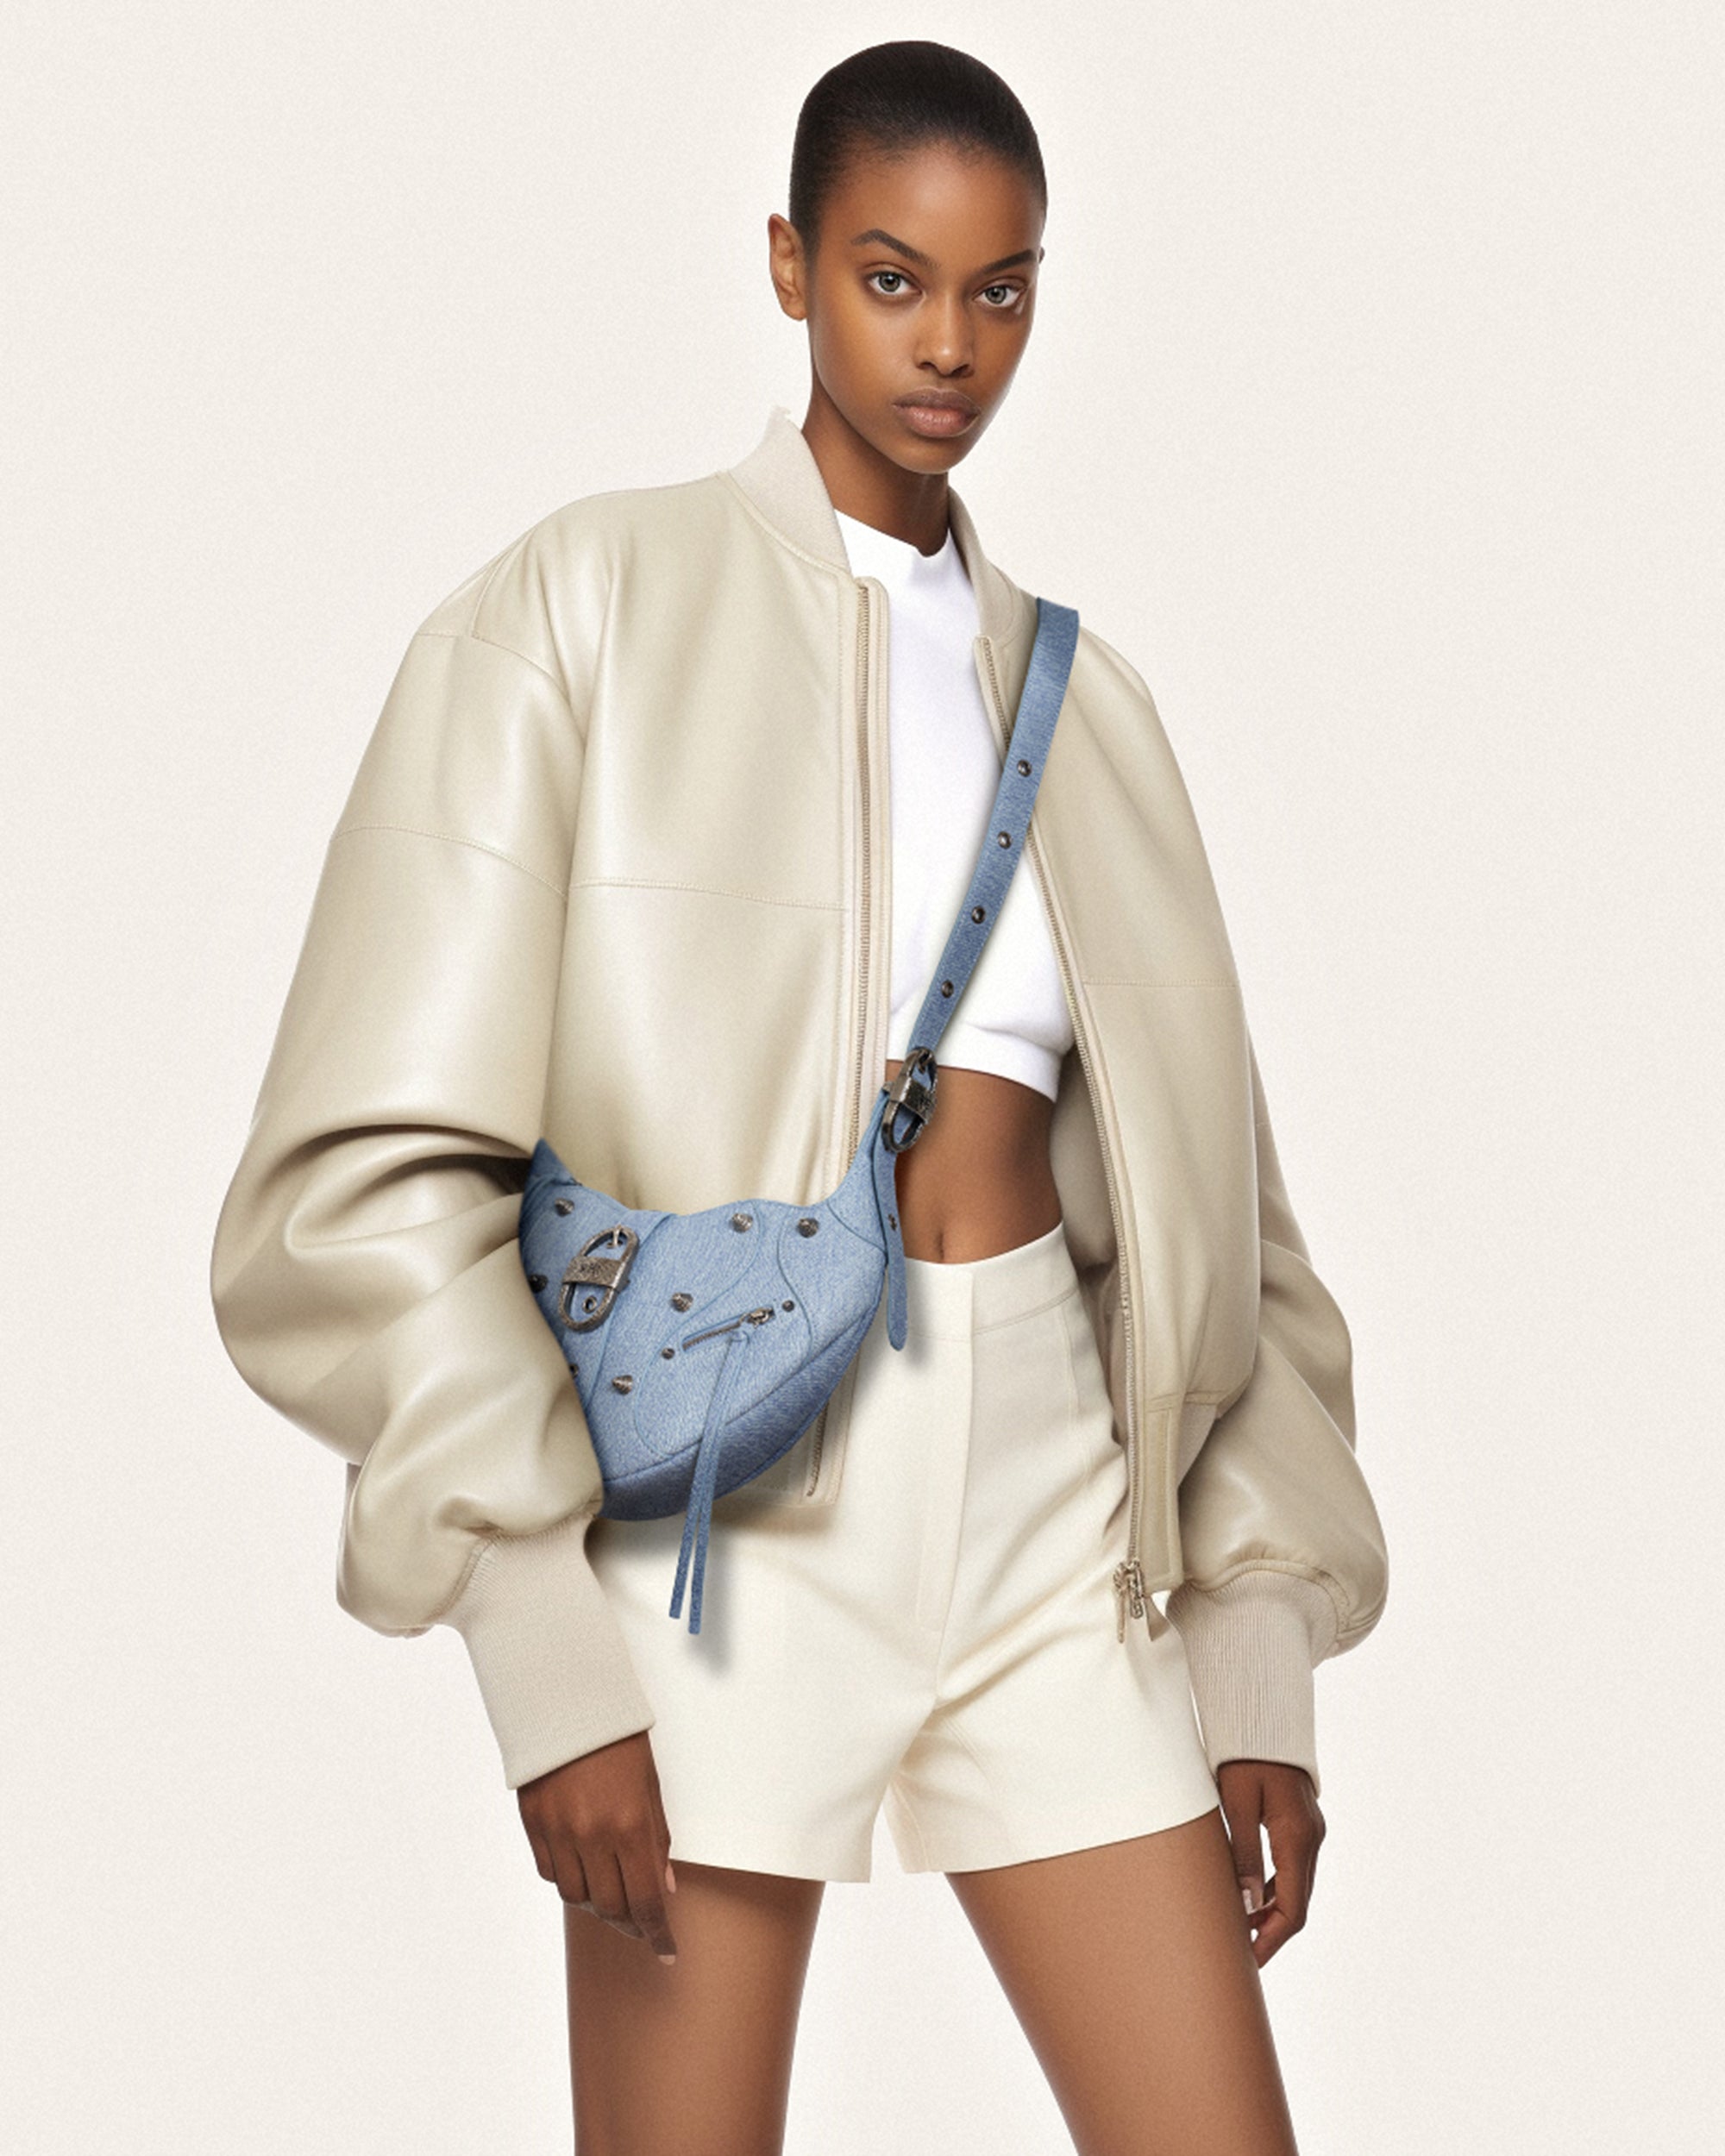 Tessa Denim Embossed Shoulder Bag - Blue Online Shopping - JW Pei